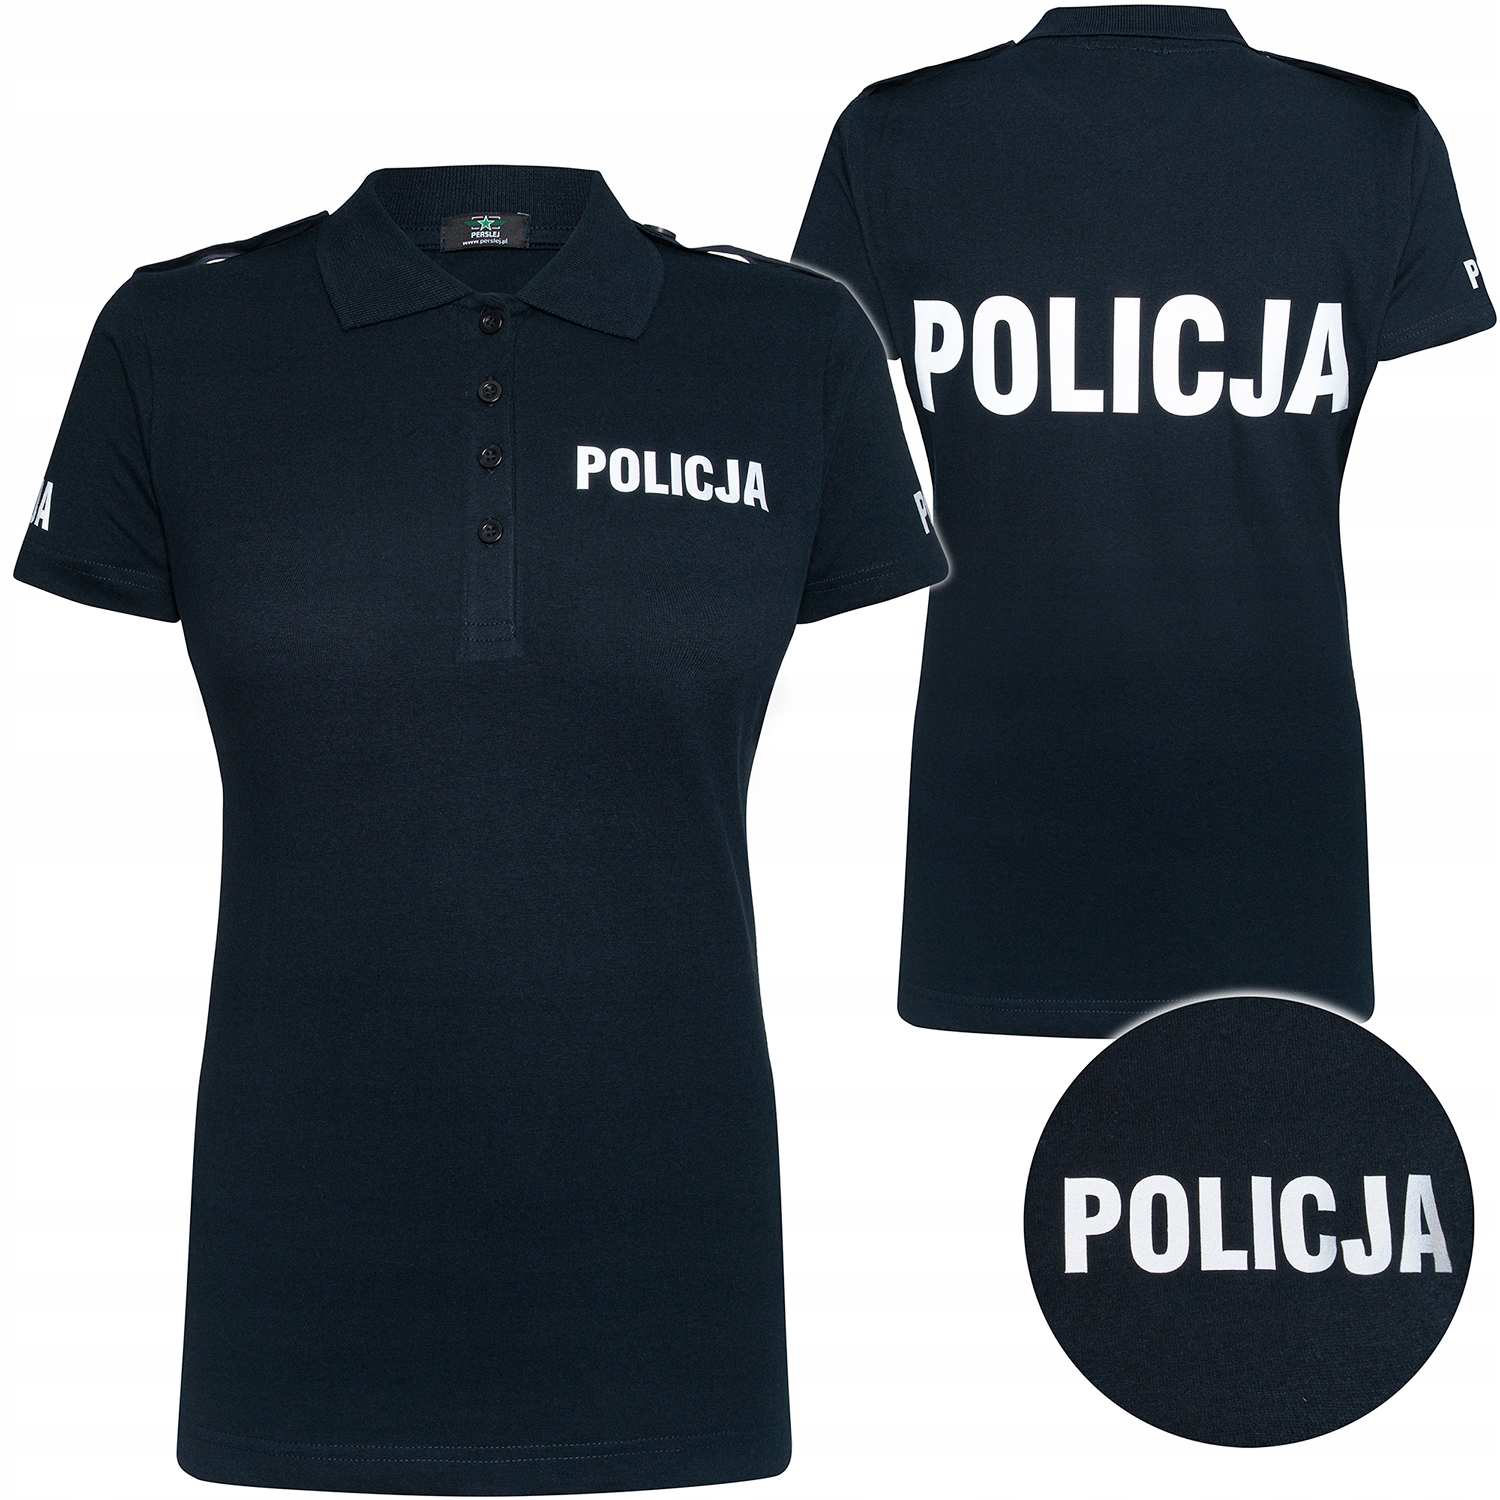 

Koszulka Damska Służbowa Polo Policja granatowa Xs